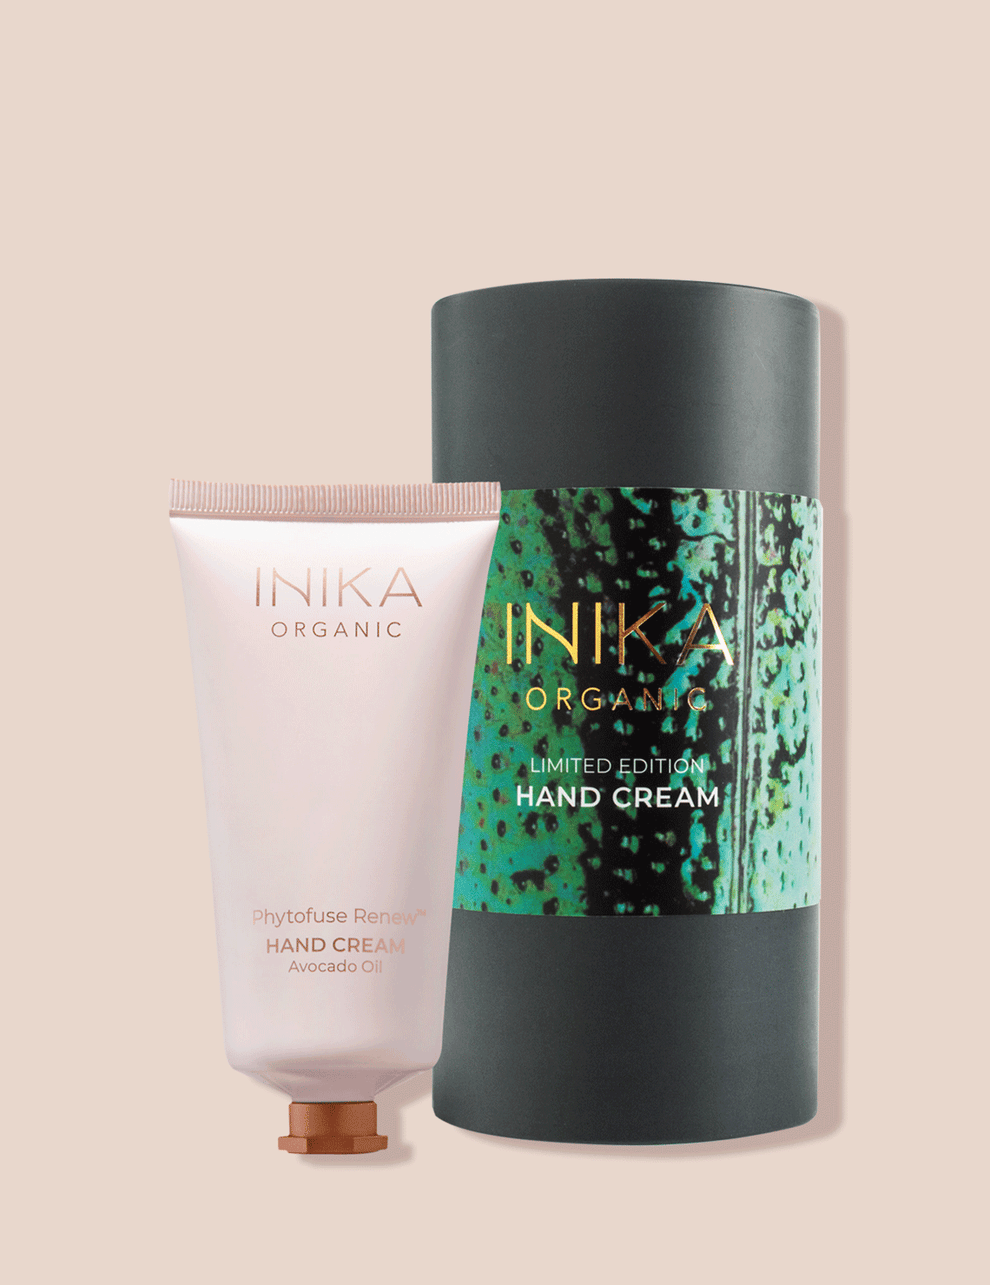 INIKA Organic Limited Edition Hand Cream